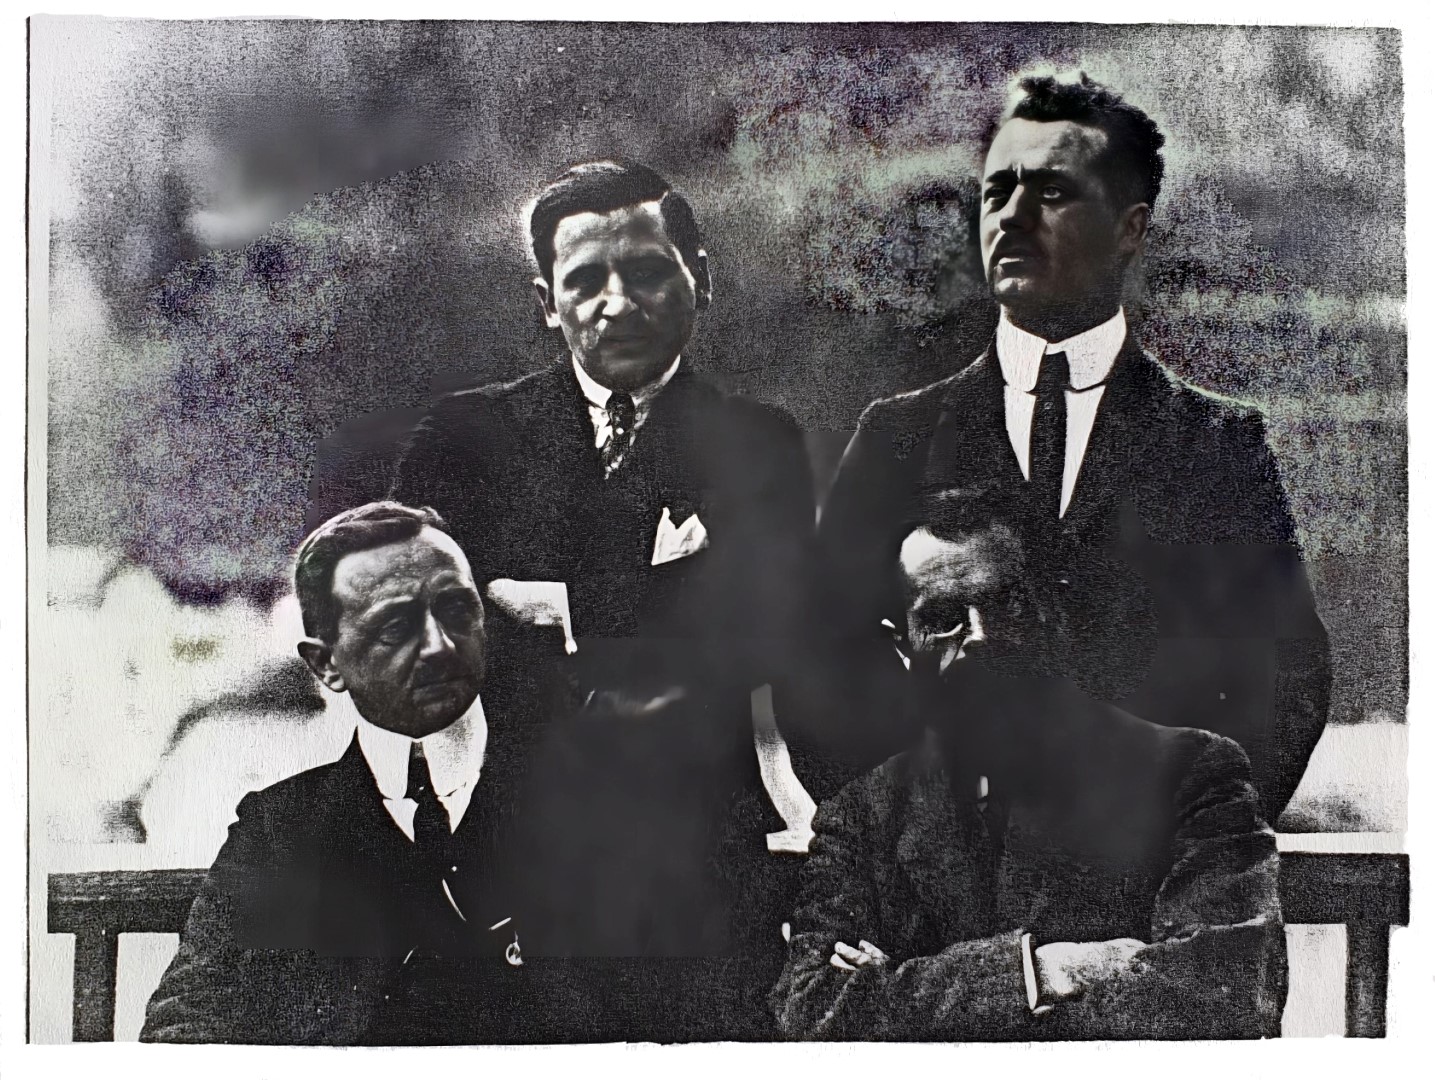  Hans Rudolf Hilfiker, Engelhard Pargaetzi, Rolf Merlitschek, Martin Bergmaier